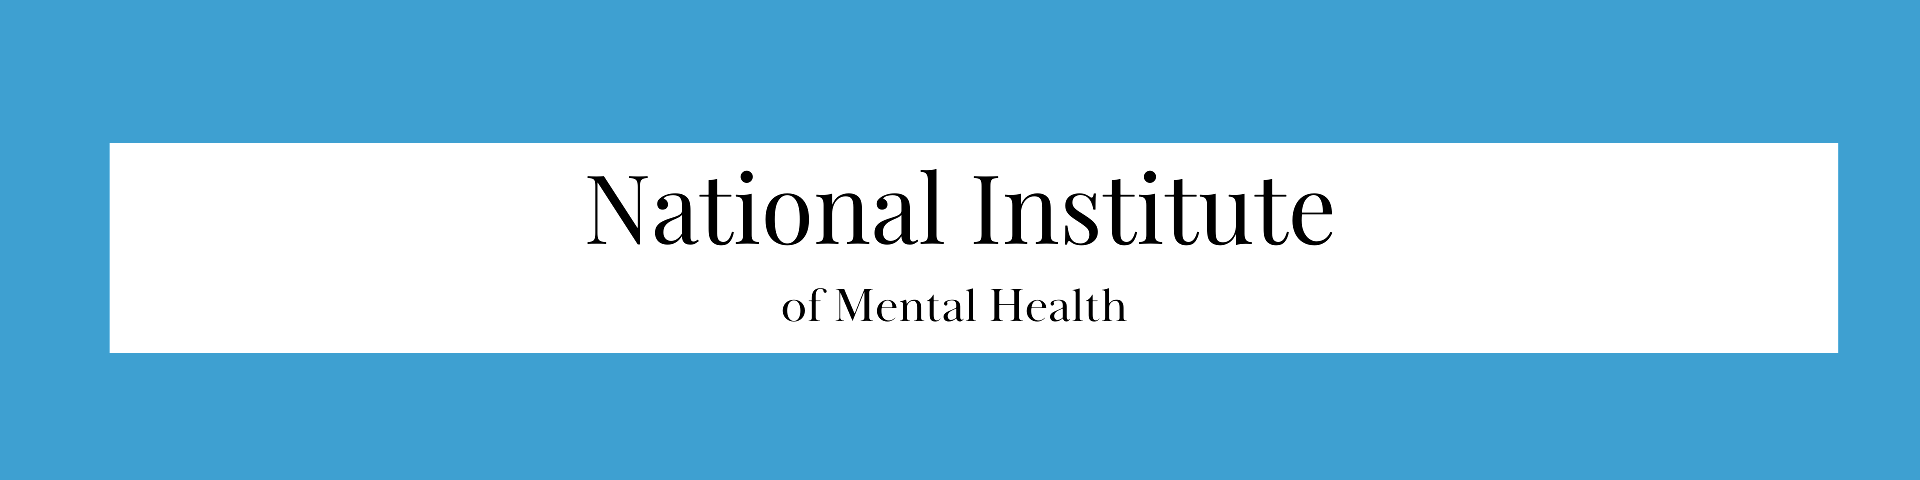 National Institute of Mental Health (Link)